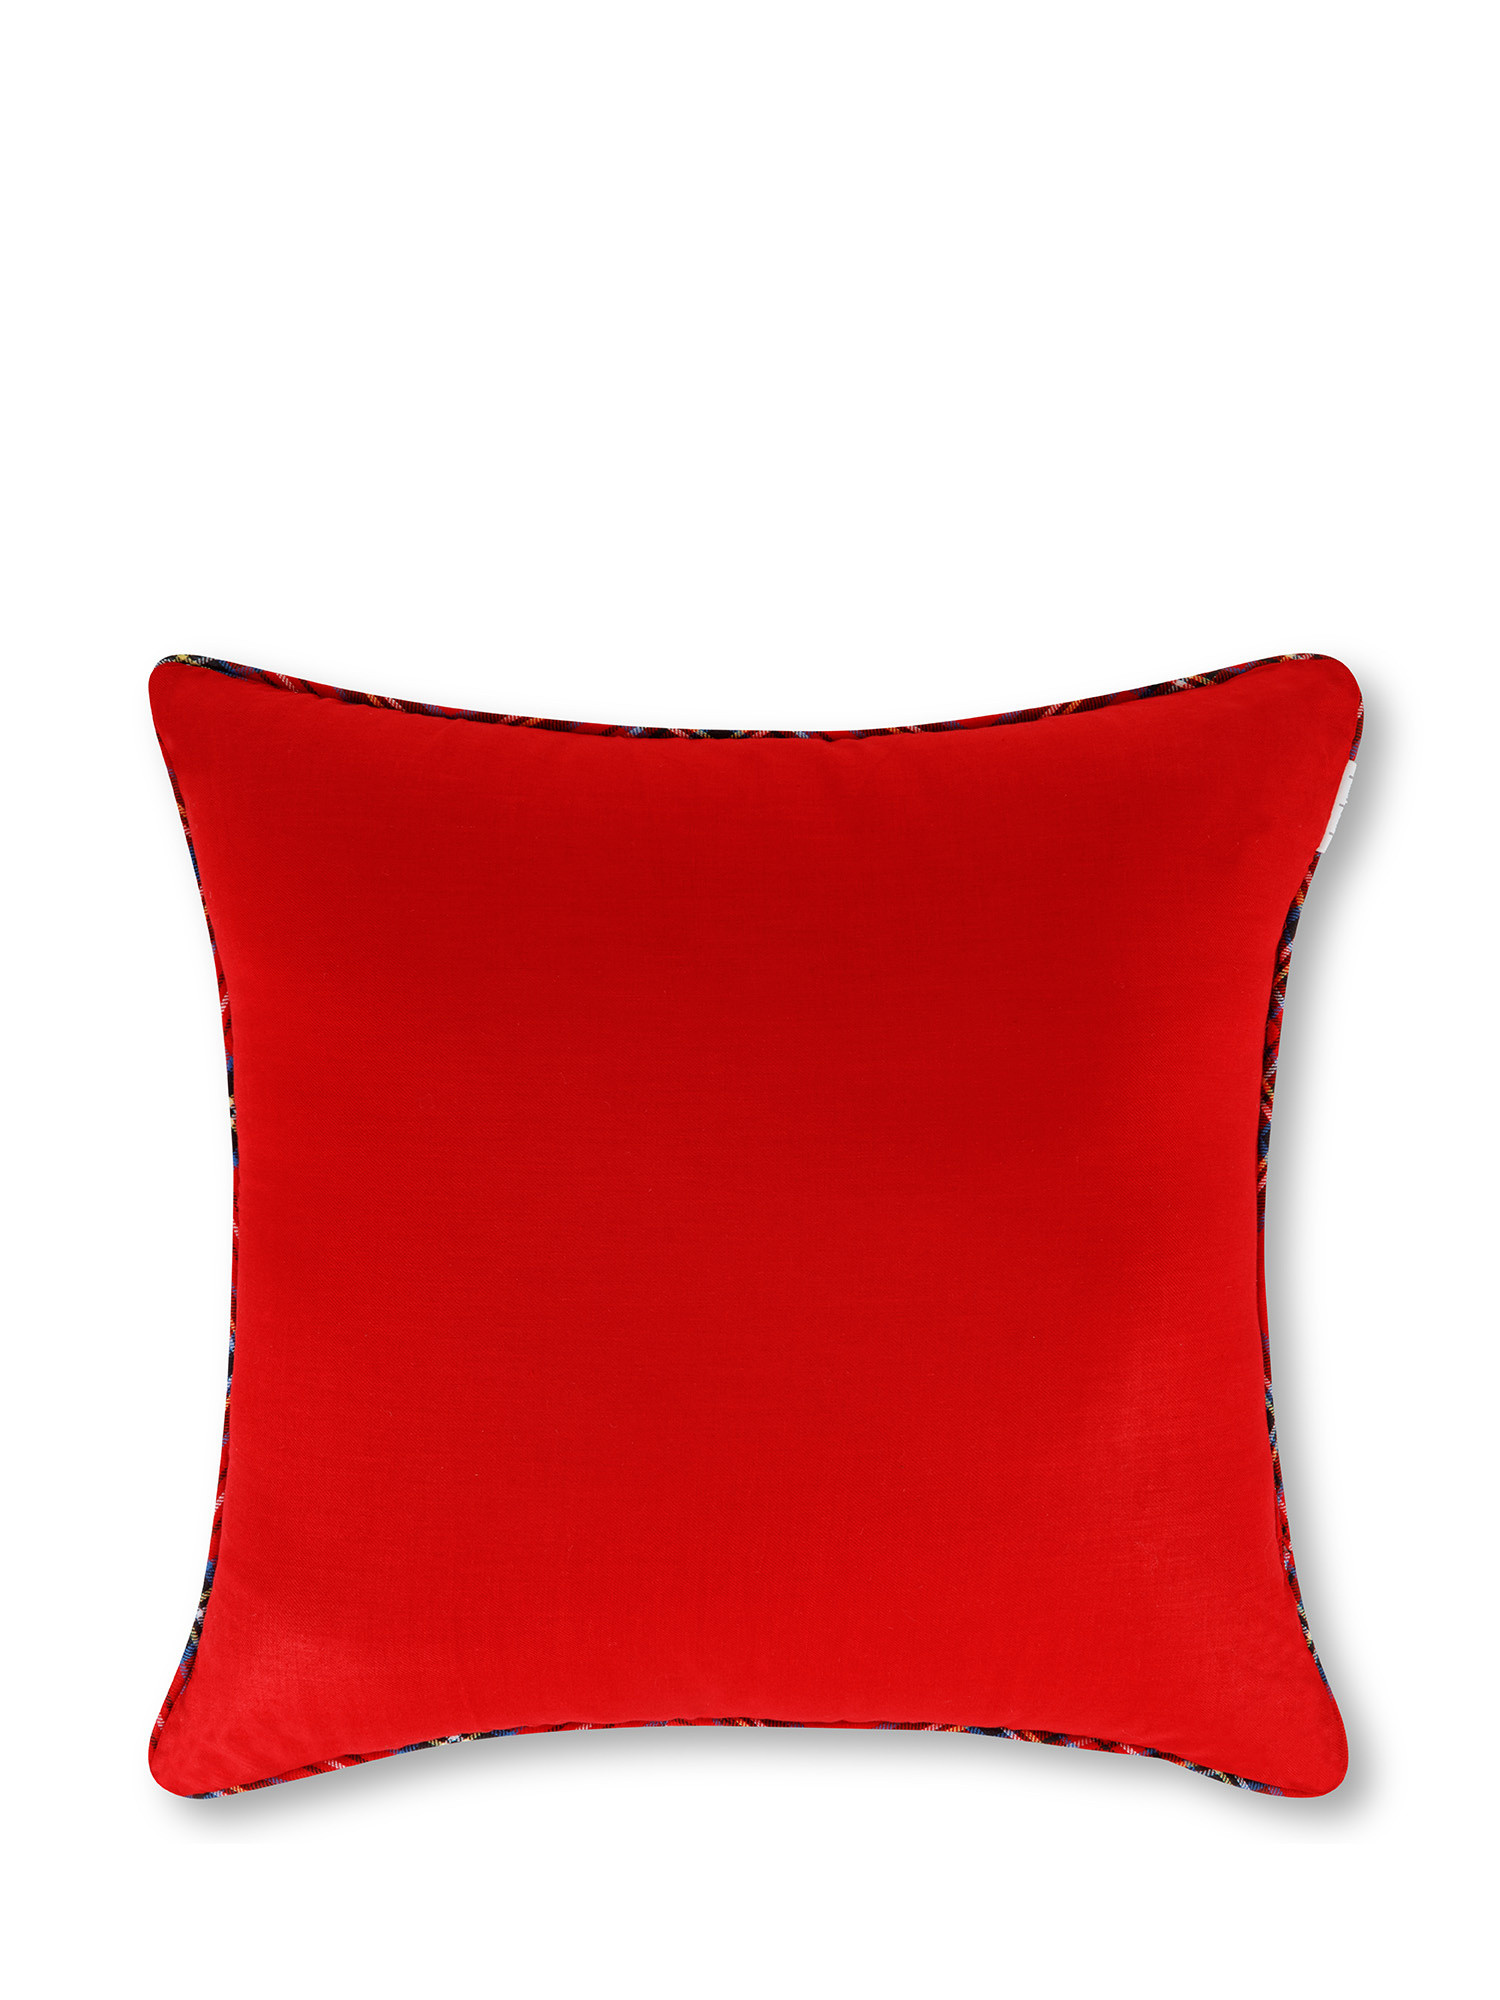 Cuscino caldo cotone tartan, Rosso, large image number 1